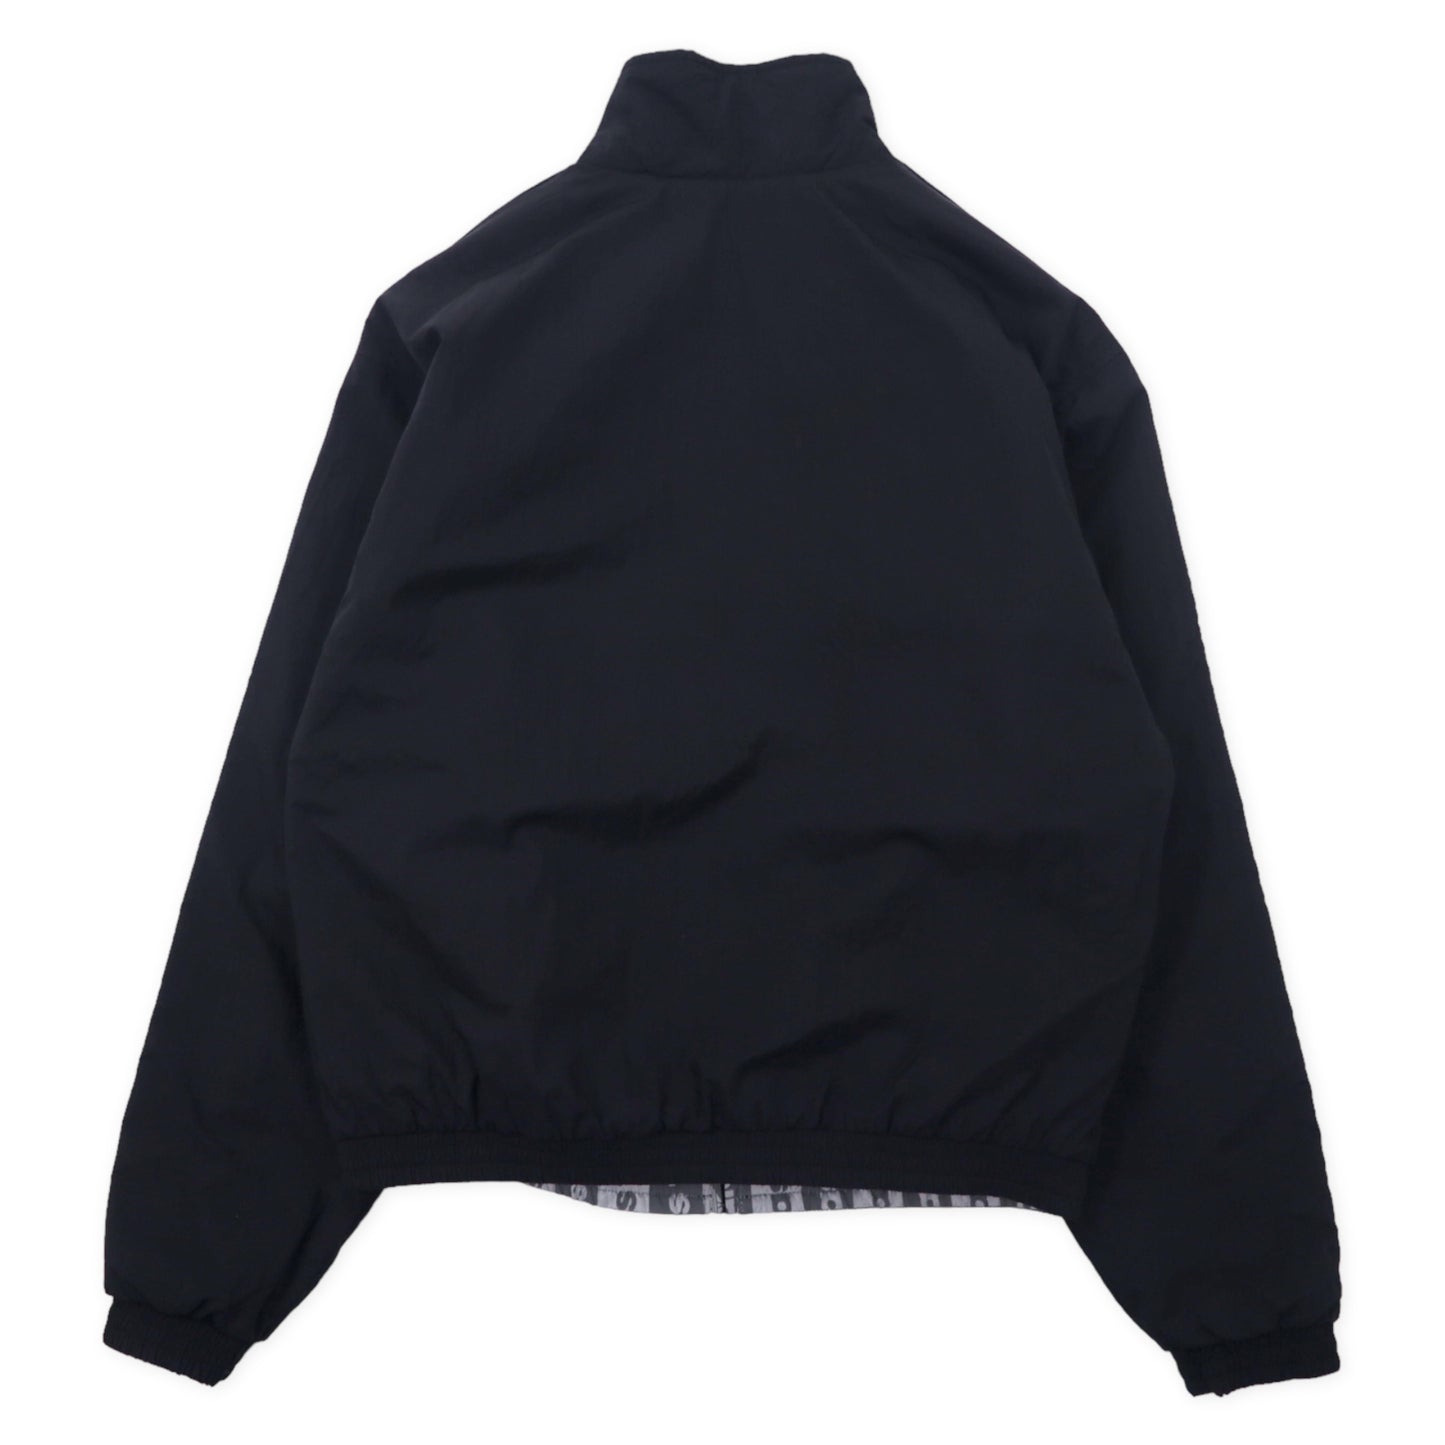 Adidas Originals Patterned Reversible Jacket M Gray Black